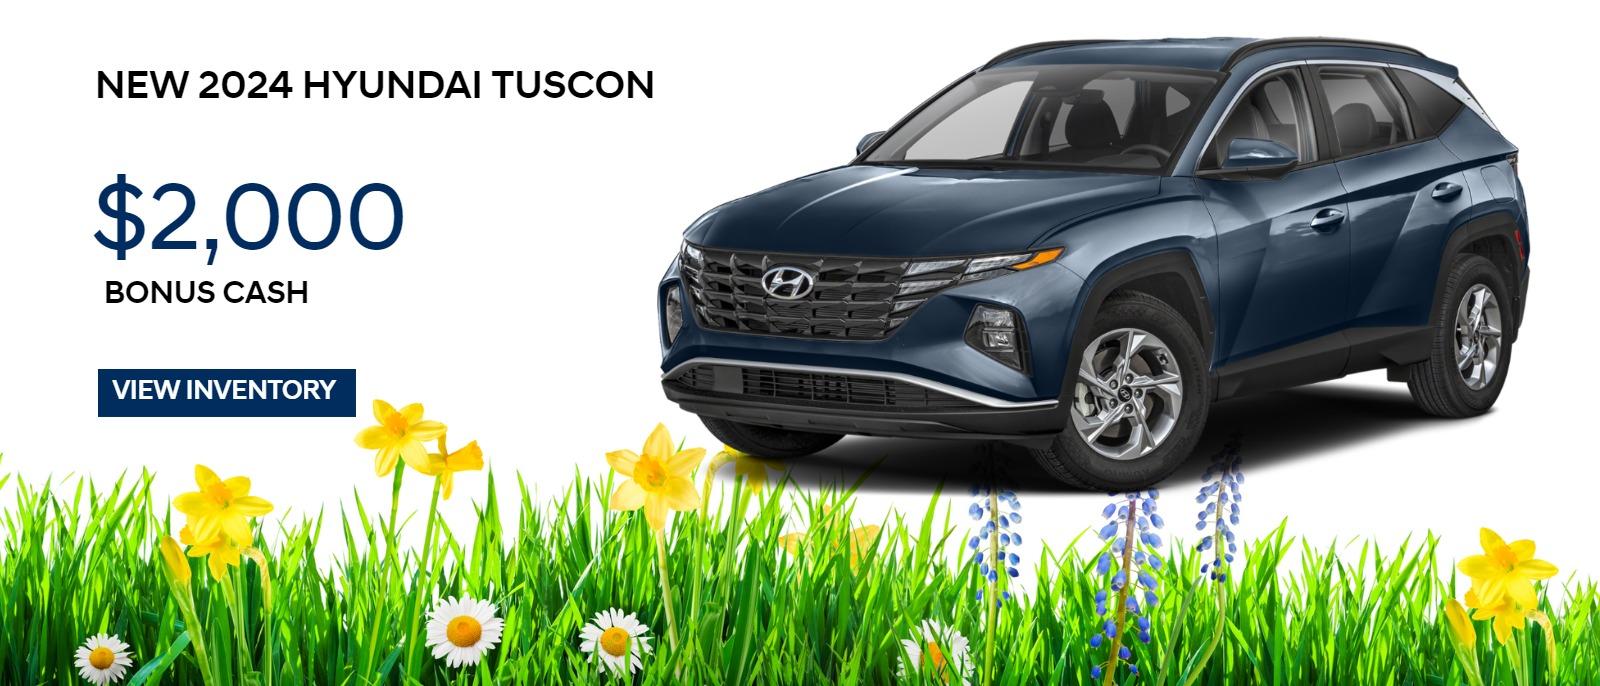 New 2024 Hyundai Tuscon
$2,000 Bonus Cash